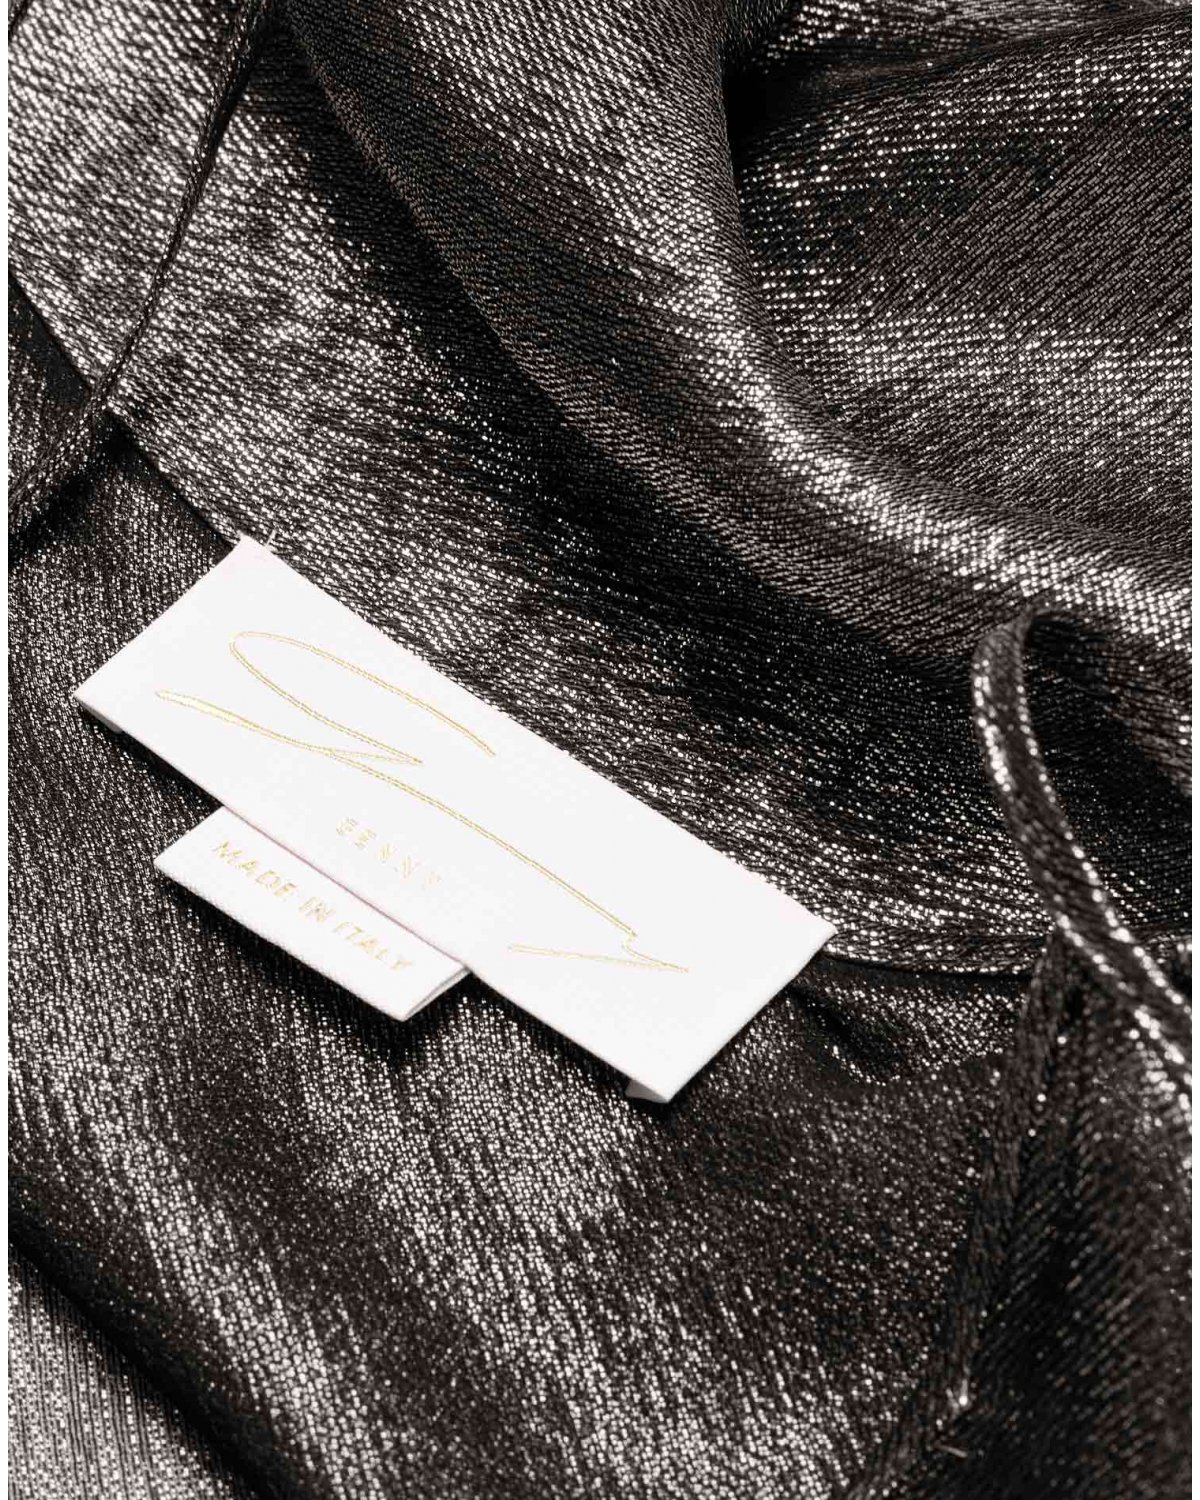 Lamé top with thin shoulder straps | Homewear & Lingerie, -30% | Genny